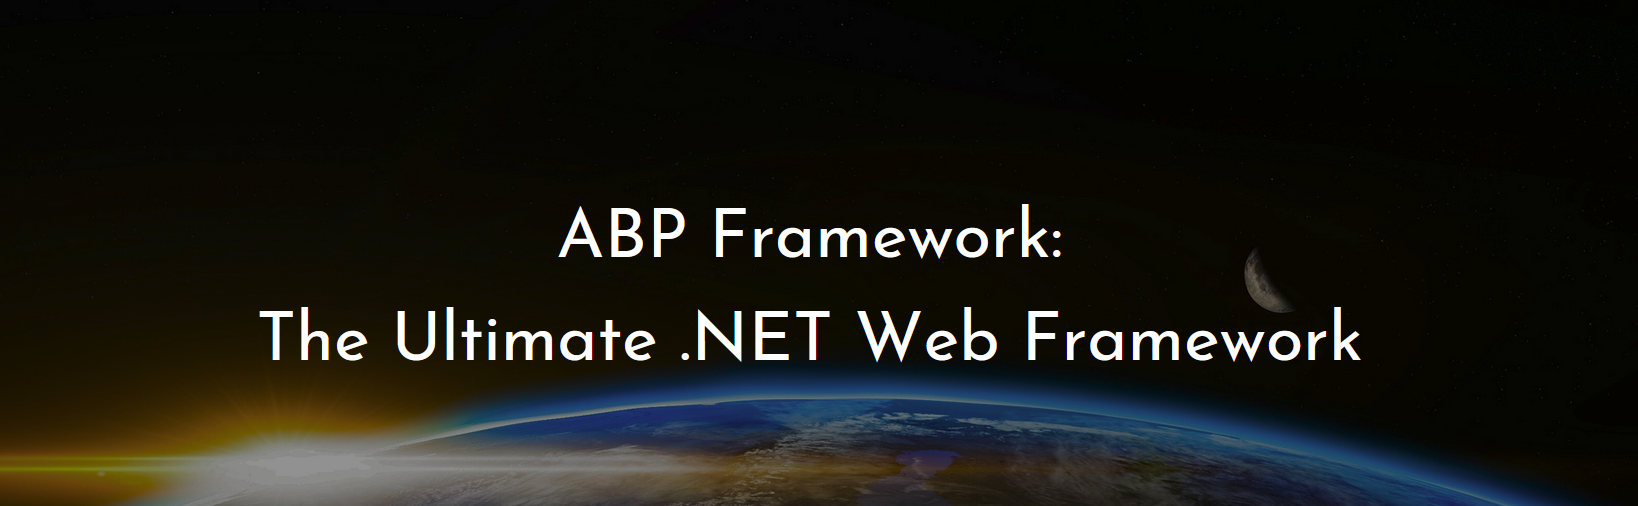 ABP Framework: The Ultimate .NET Web Framework for Rapid Application Development cover image